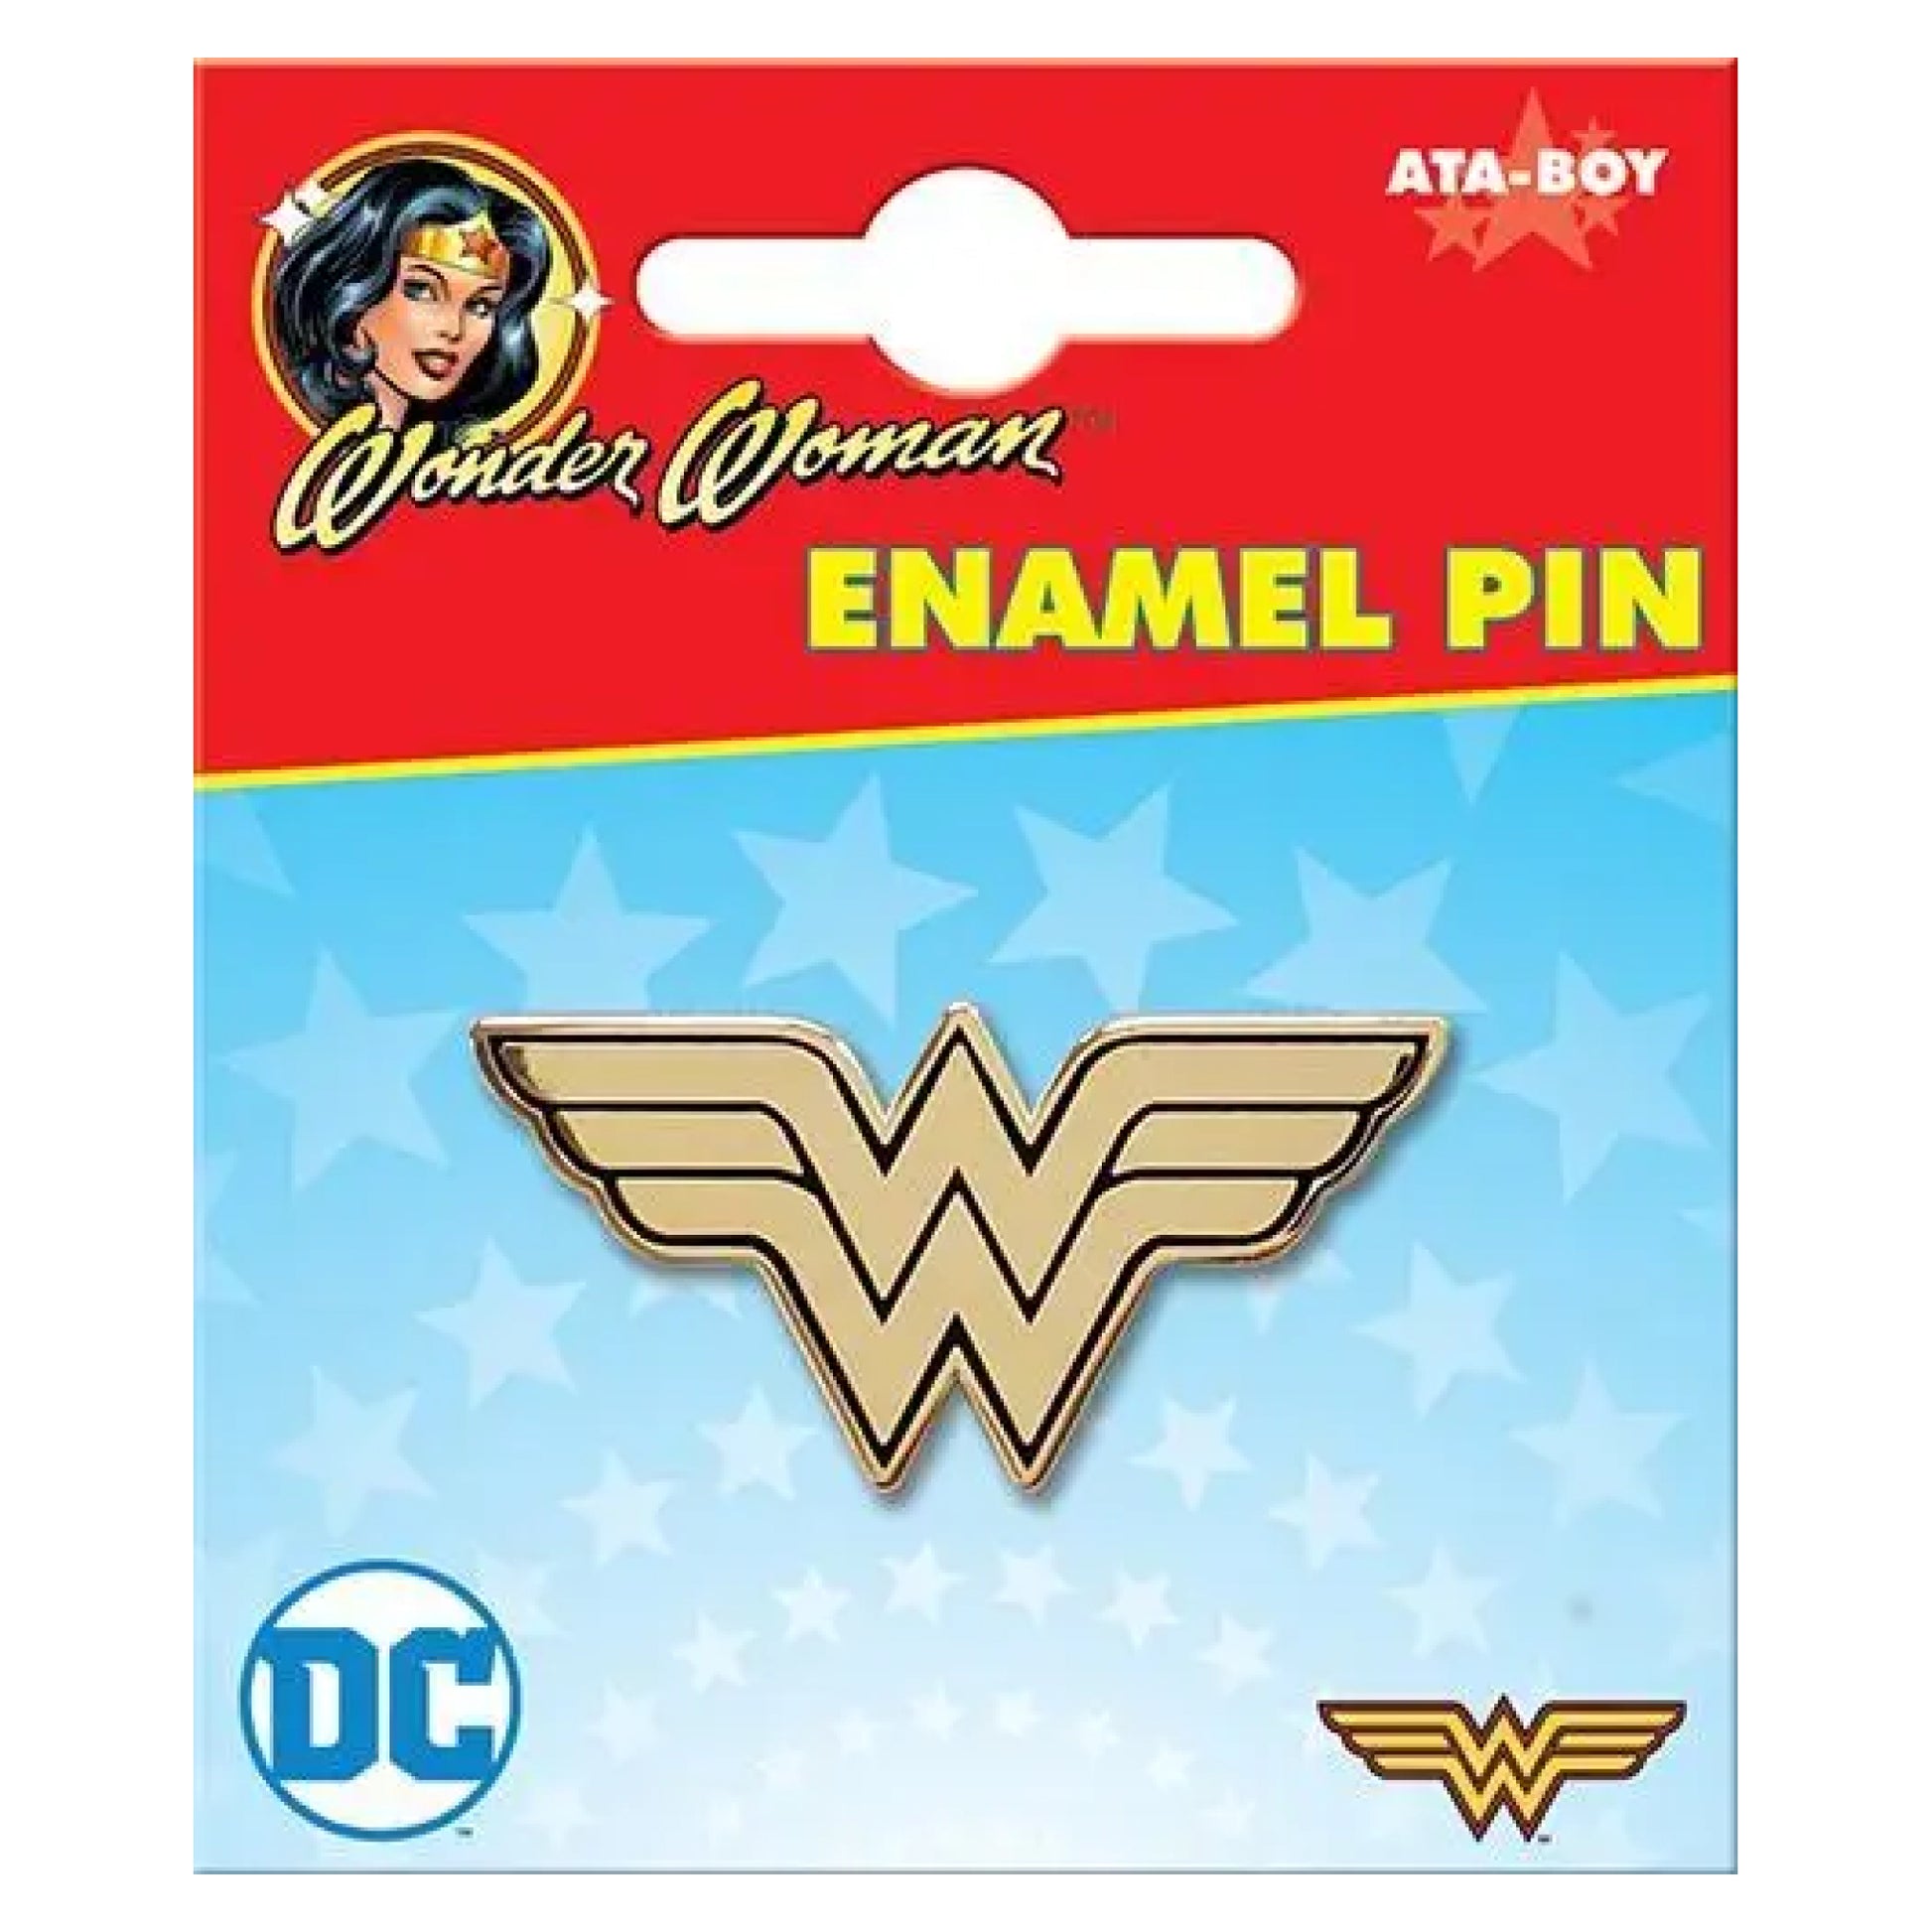 Pin on Wonder Woman